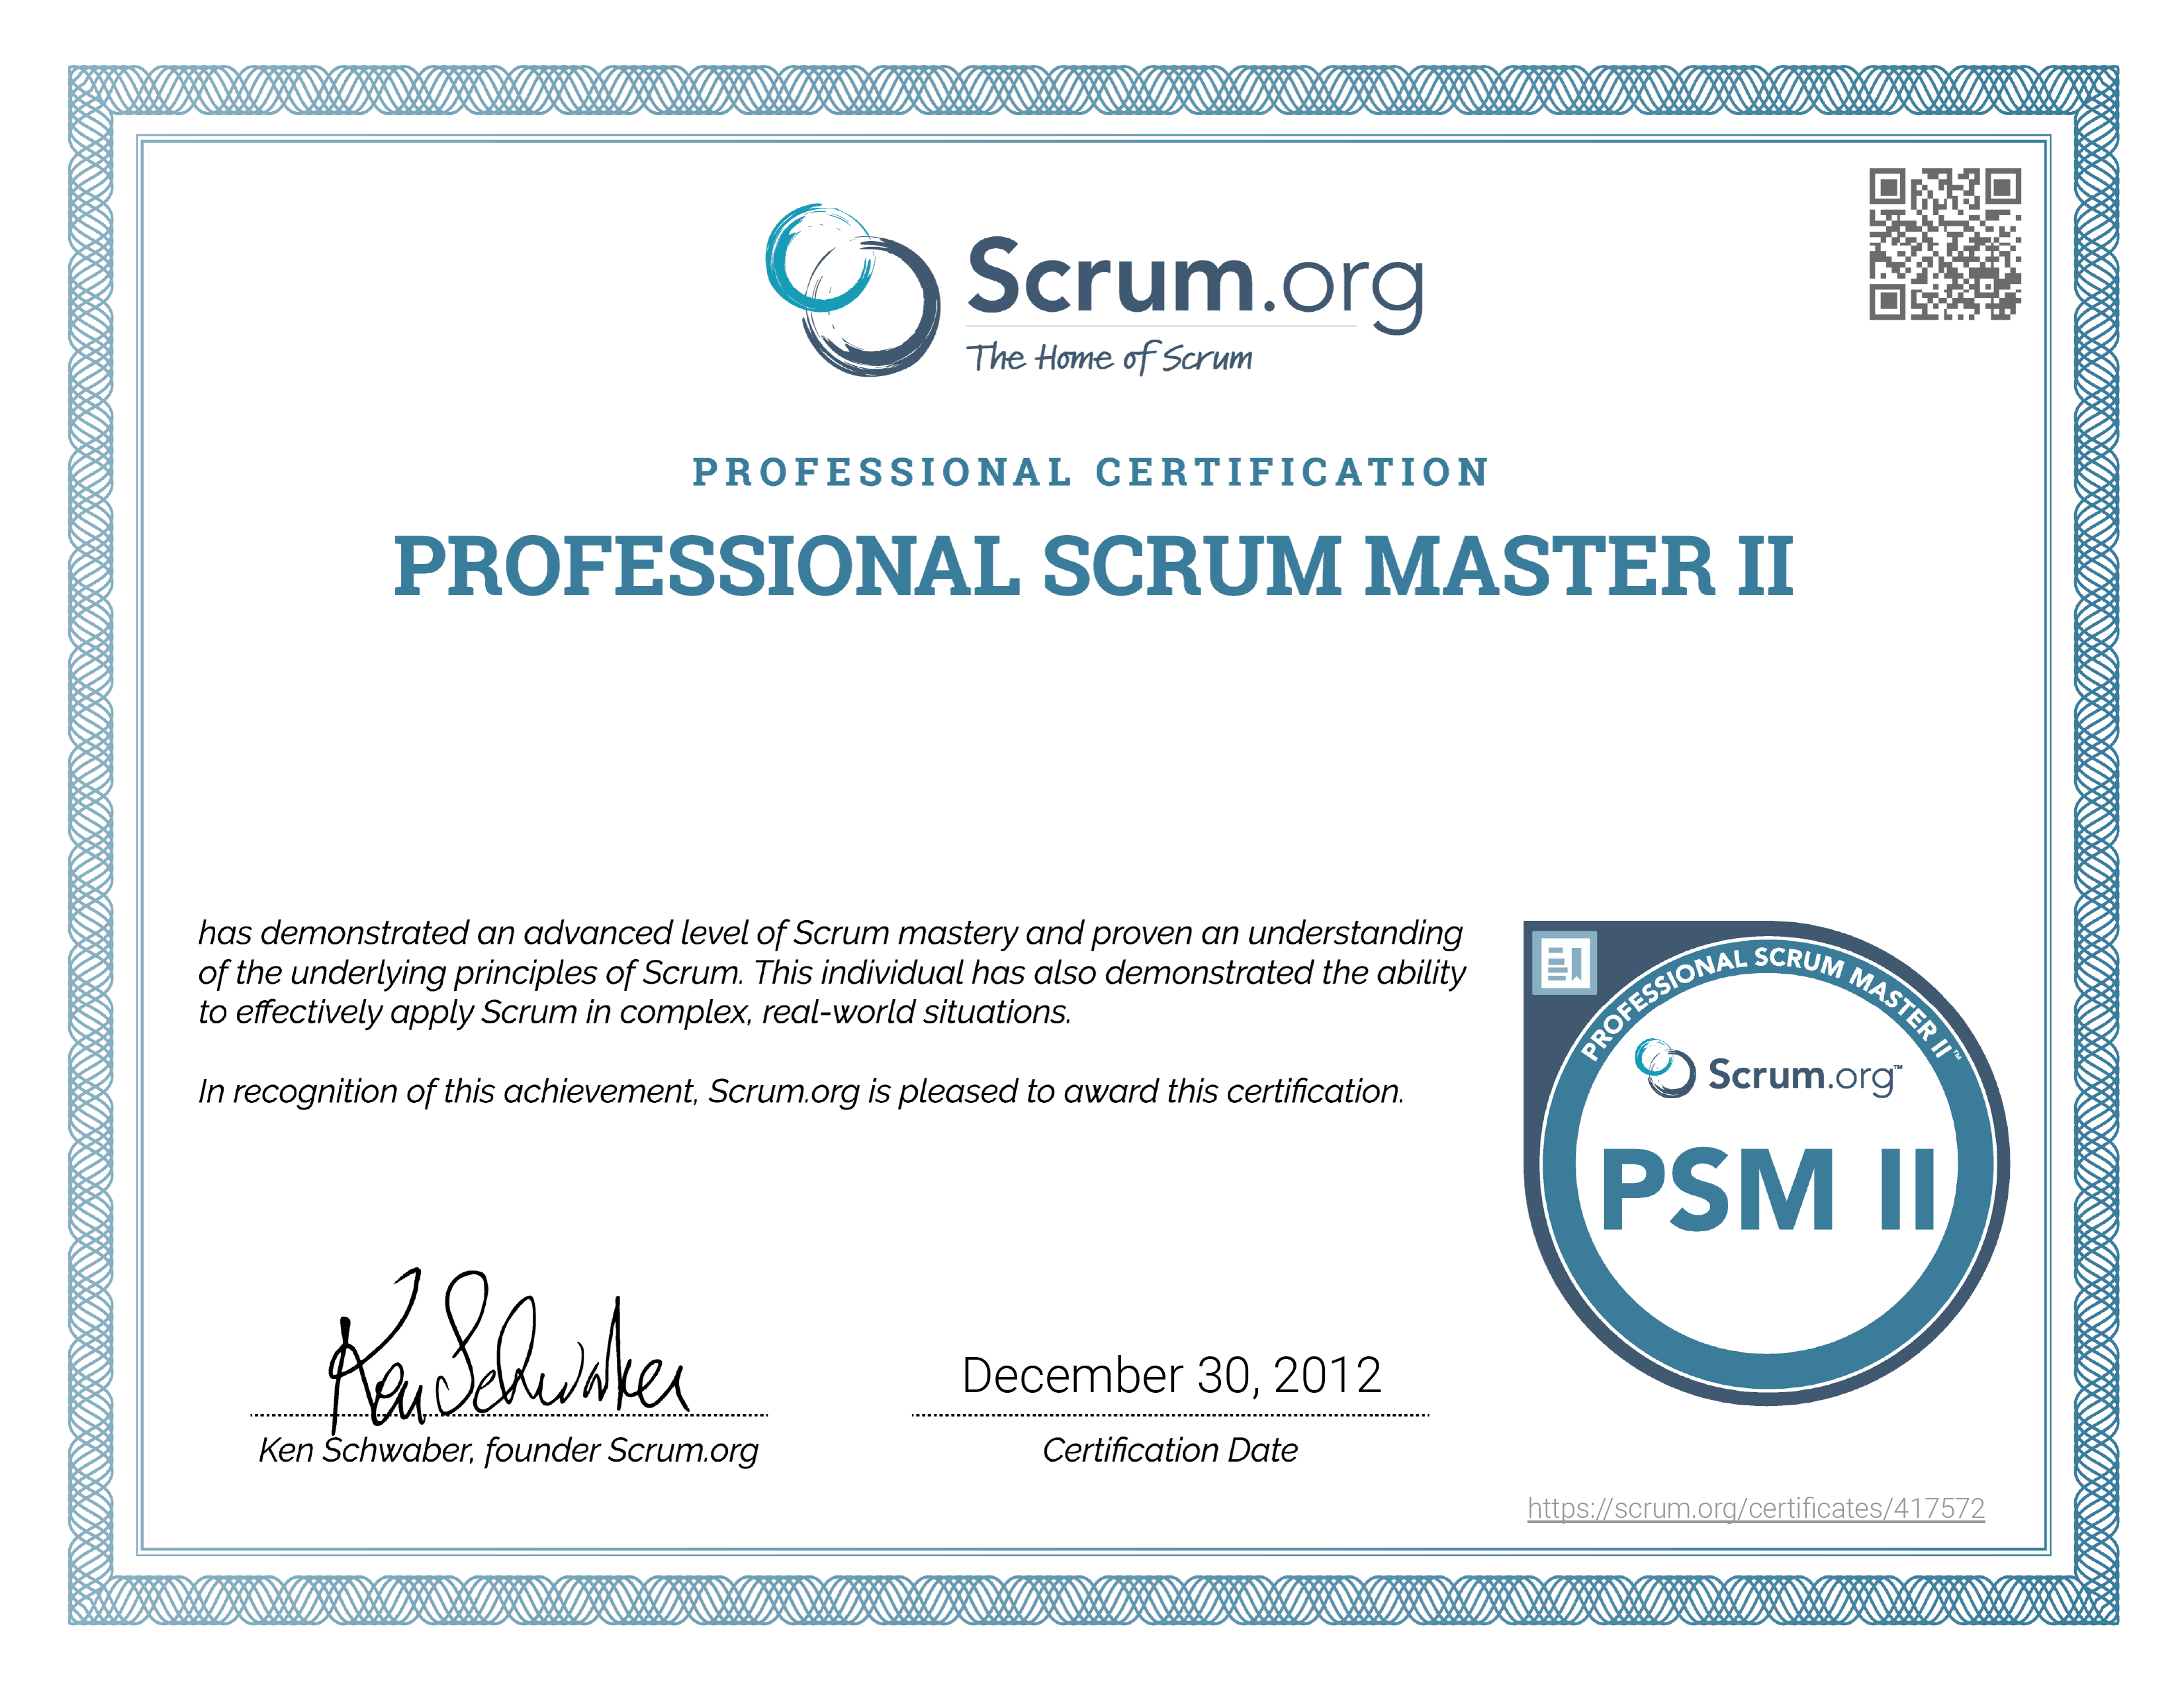 John's Professional Scrum Master II (PSM II) from Scrum.org